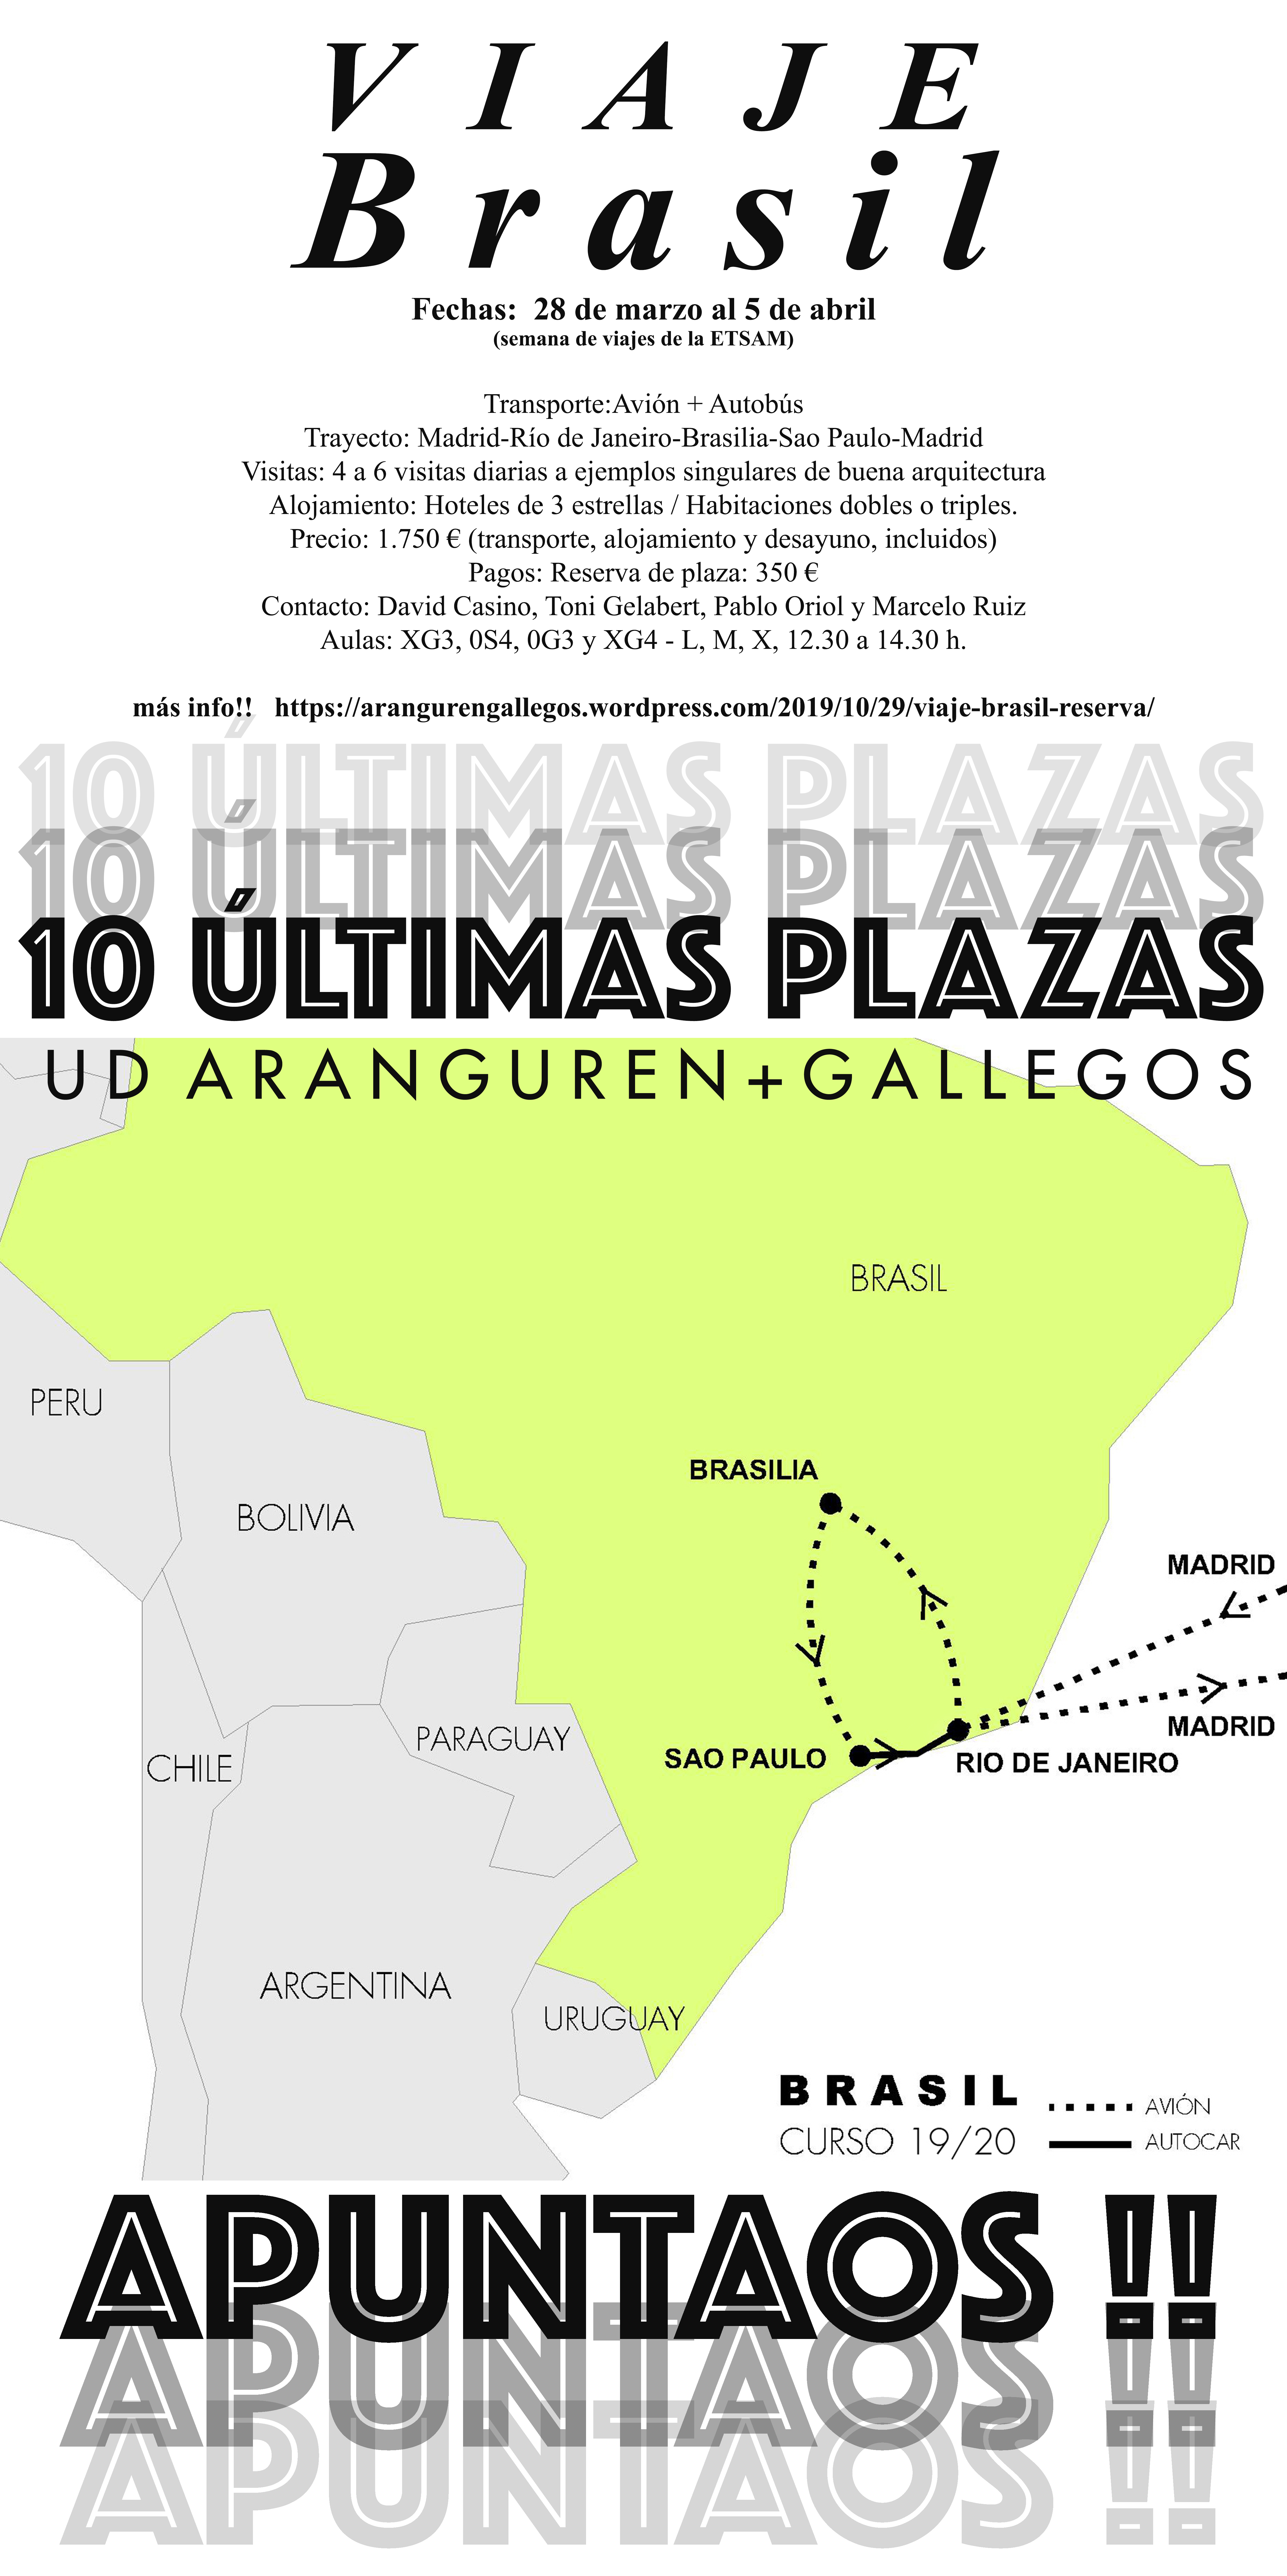 /Users/blancajuanes/Desktop/20190204_mapa españa portugal.dwg